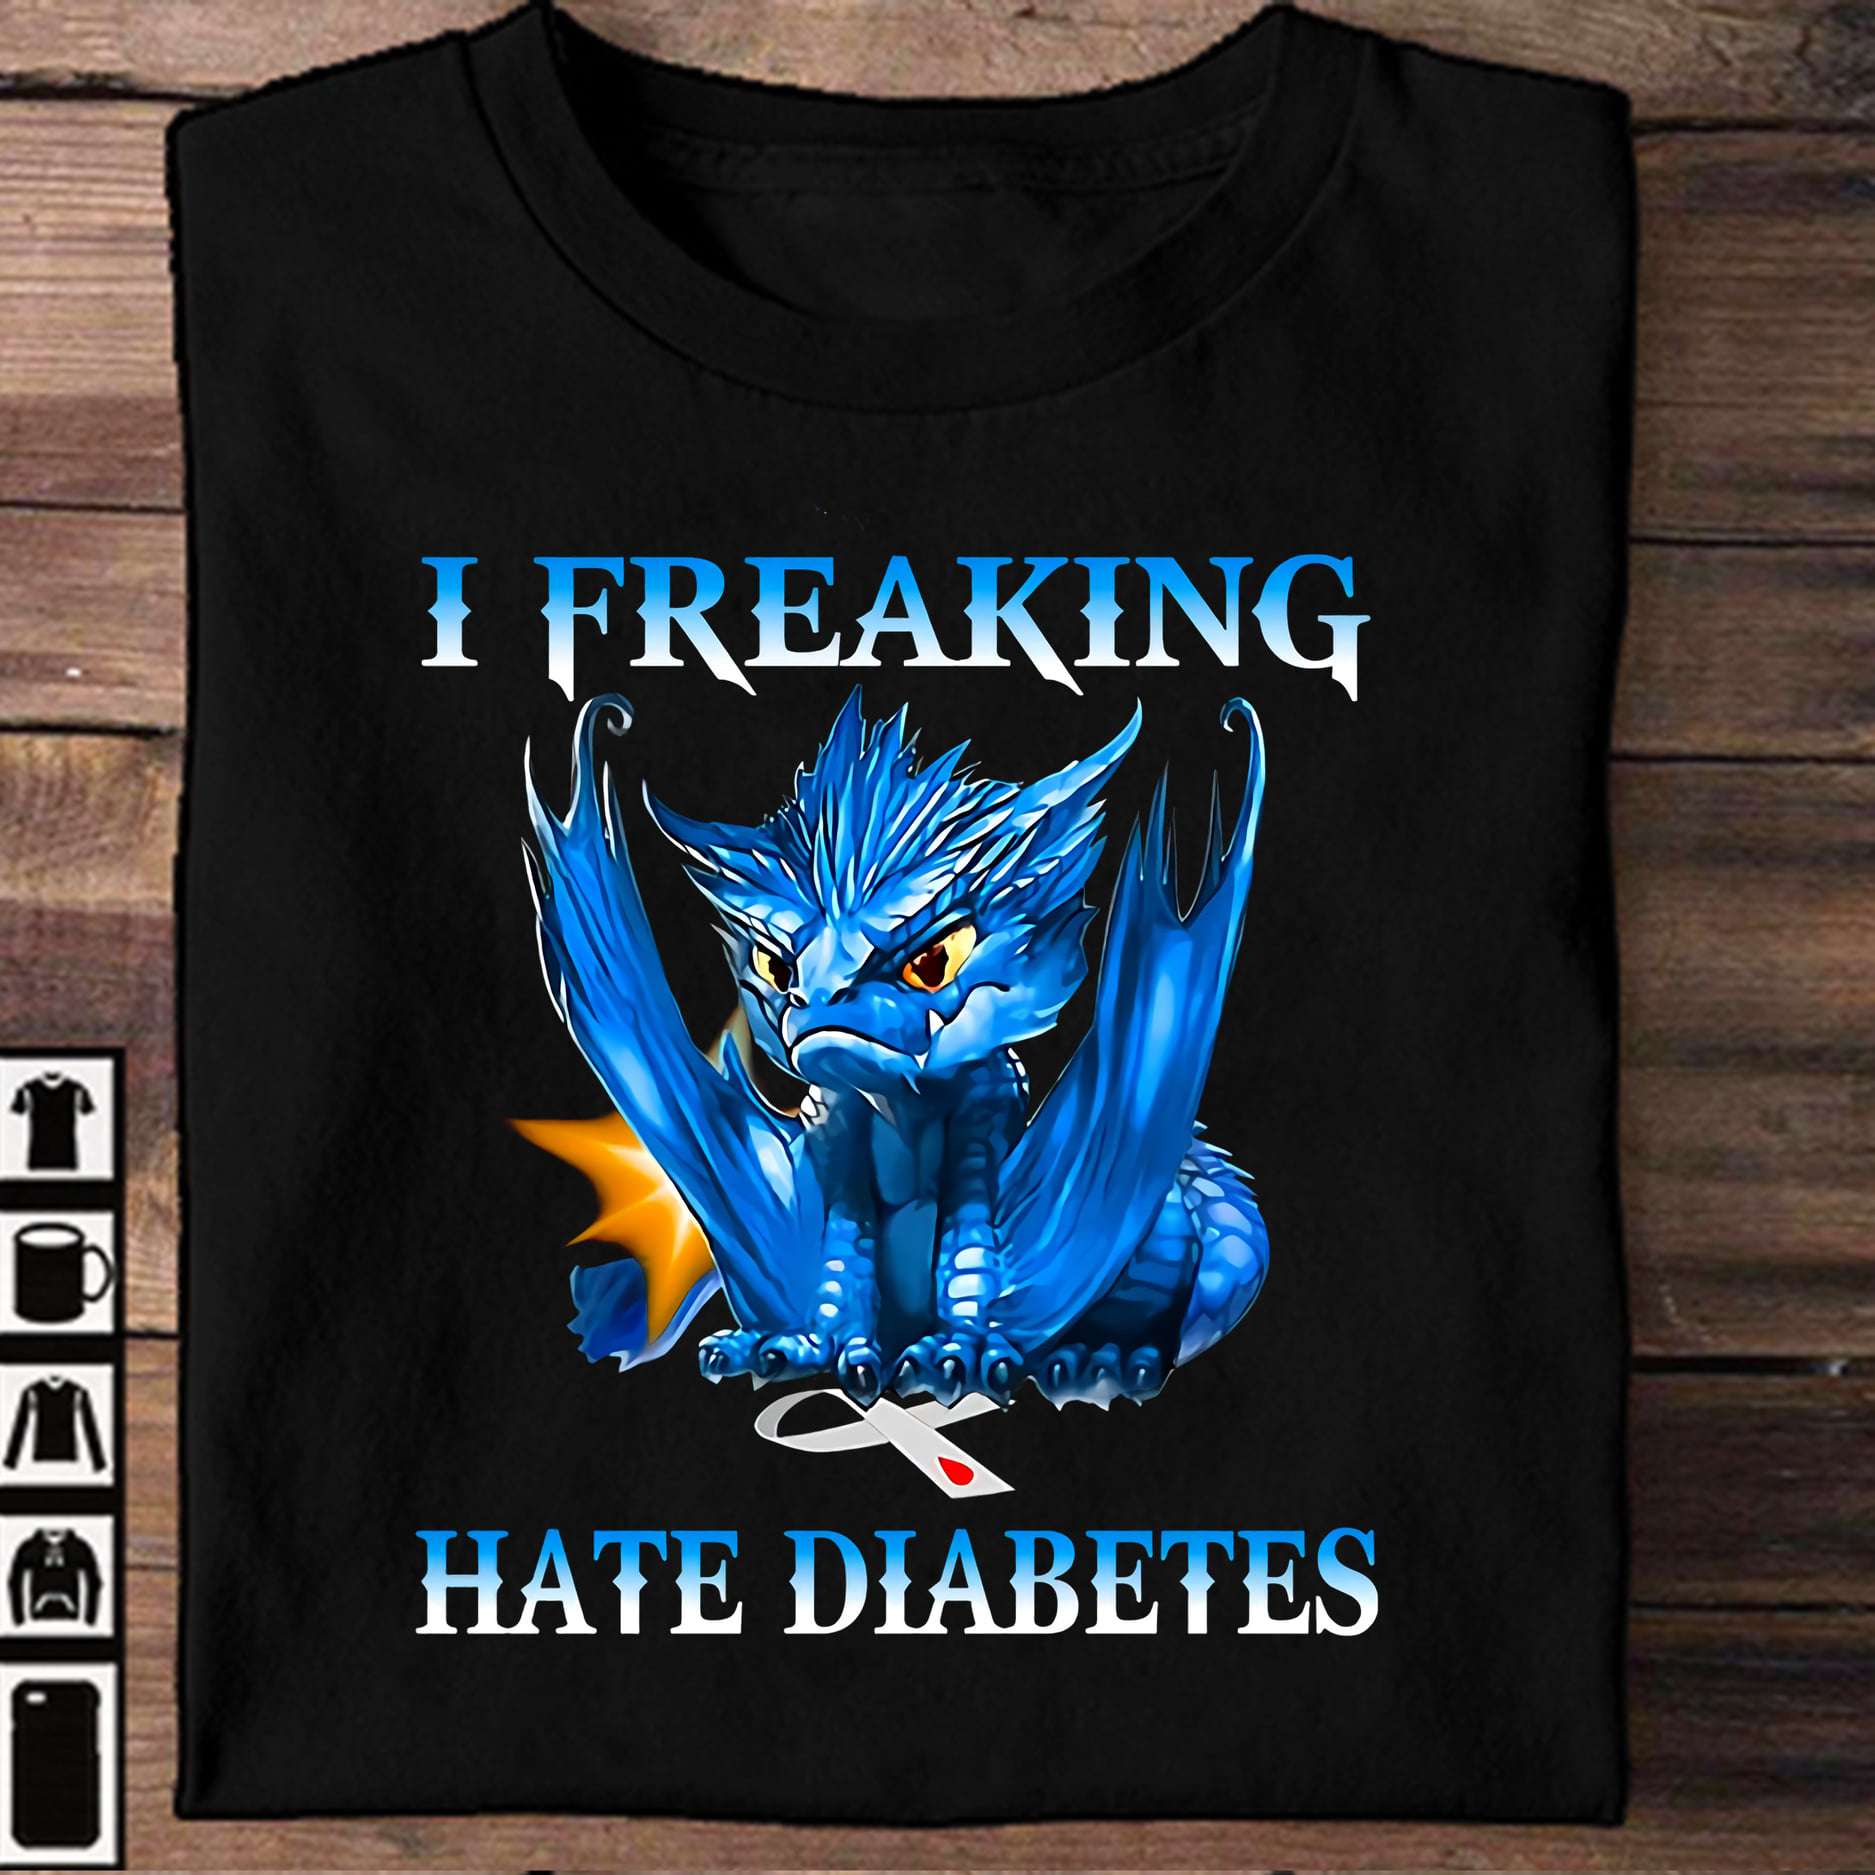 I freaking hate diabetes - Diabetes awareness, blue baby dragon with ribbon